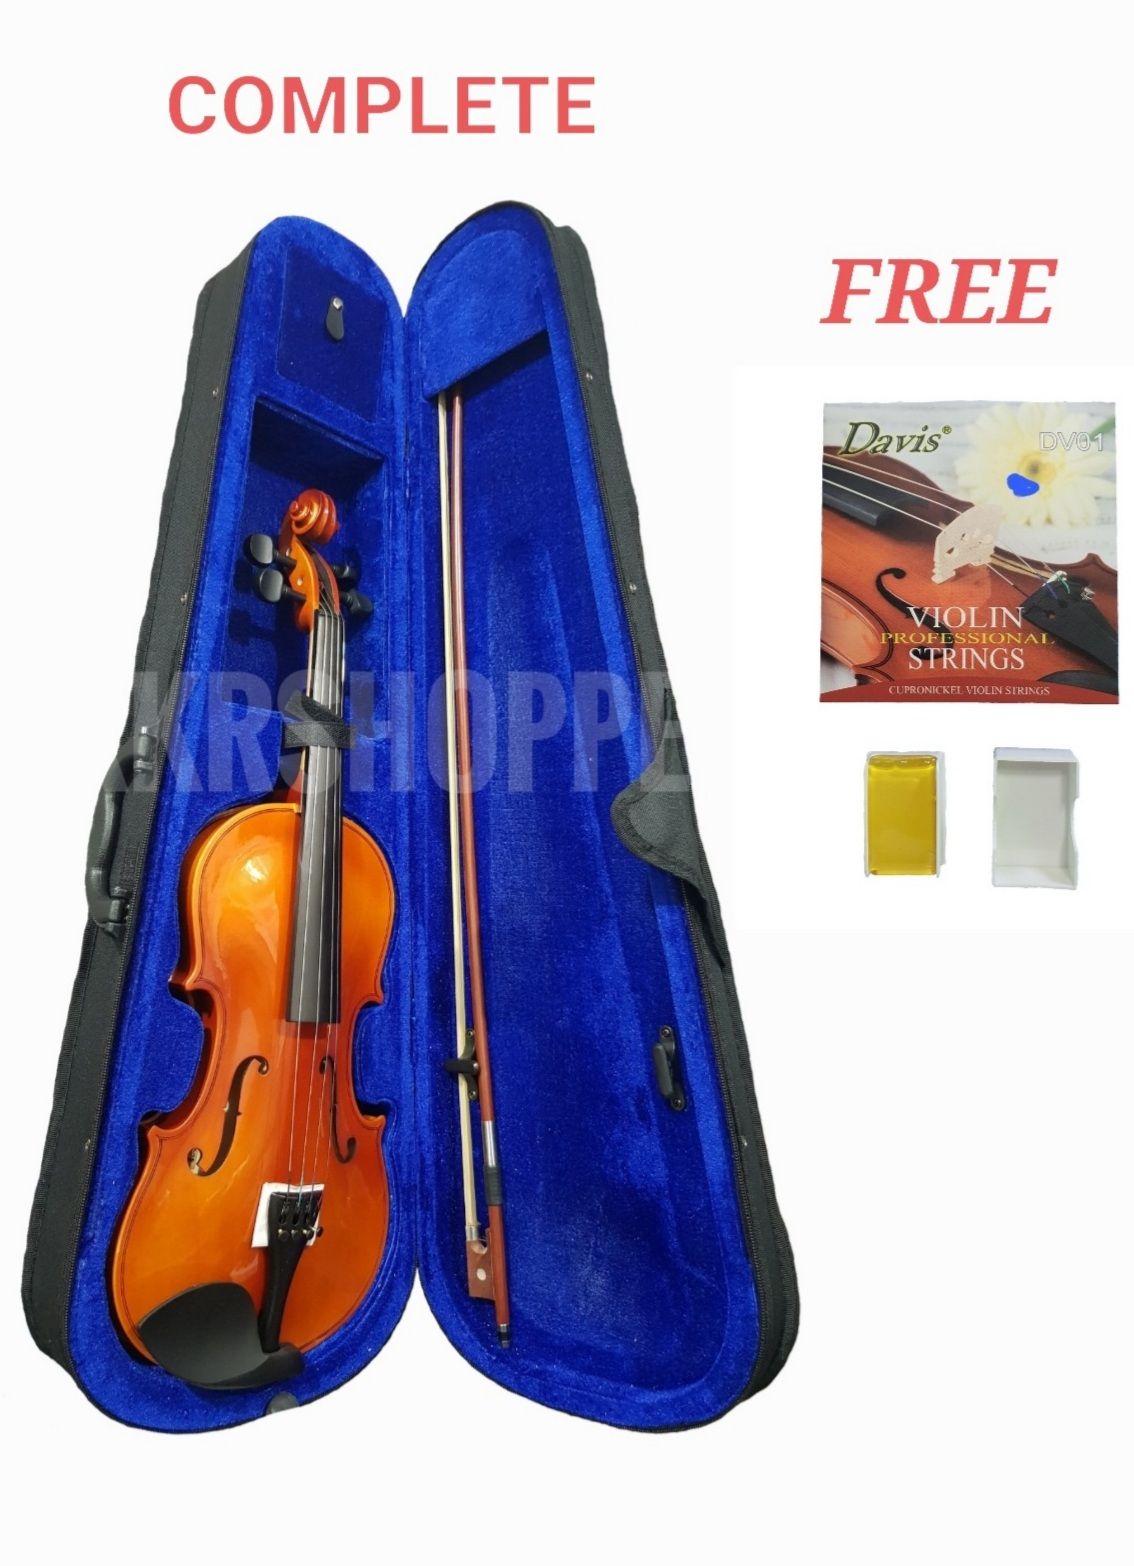 Davis/Jasmine Violin Set + Free 1 Set of Strings